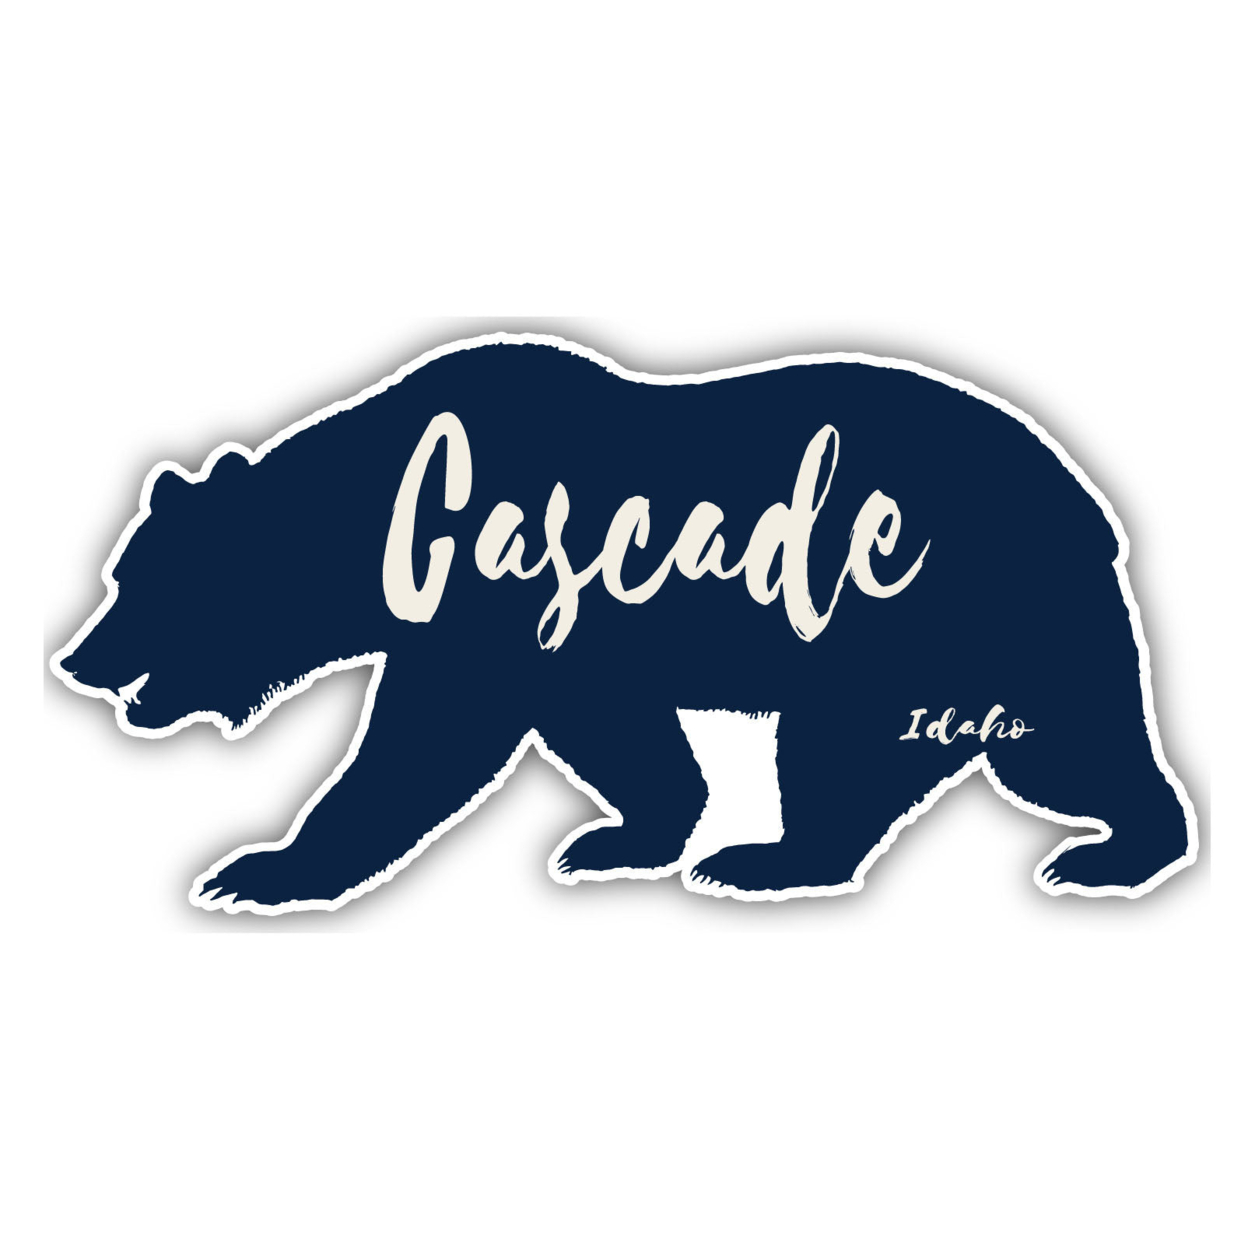 Cascade Idaho Souvenir Decorative Stickers (Choose Theme And Size) - Single Unit, 12-Inch, Bear